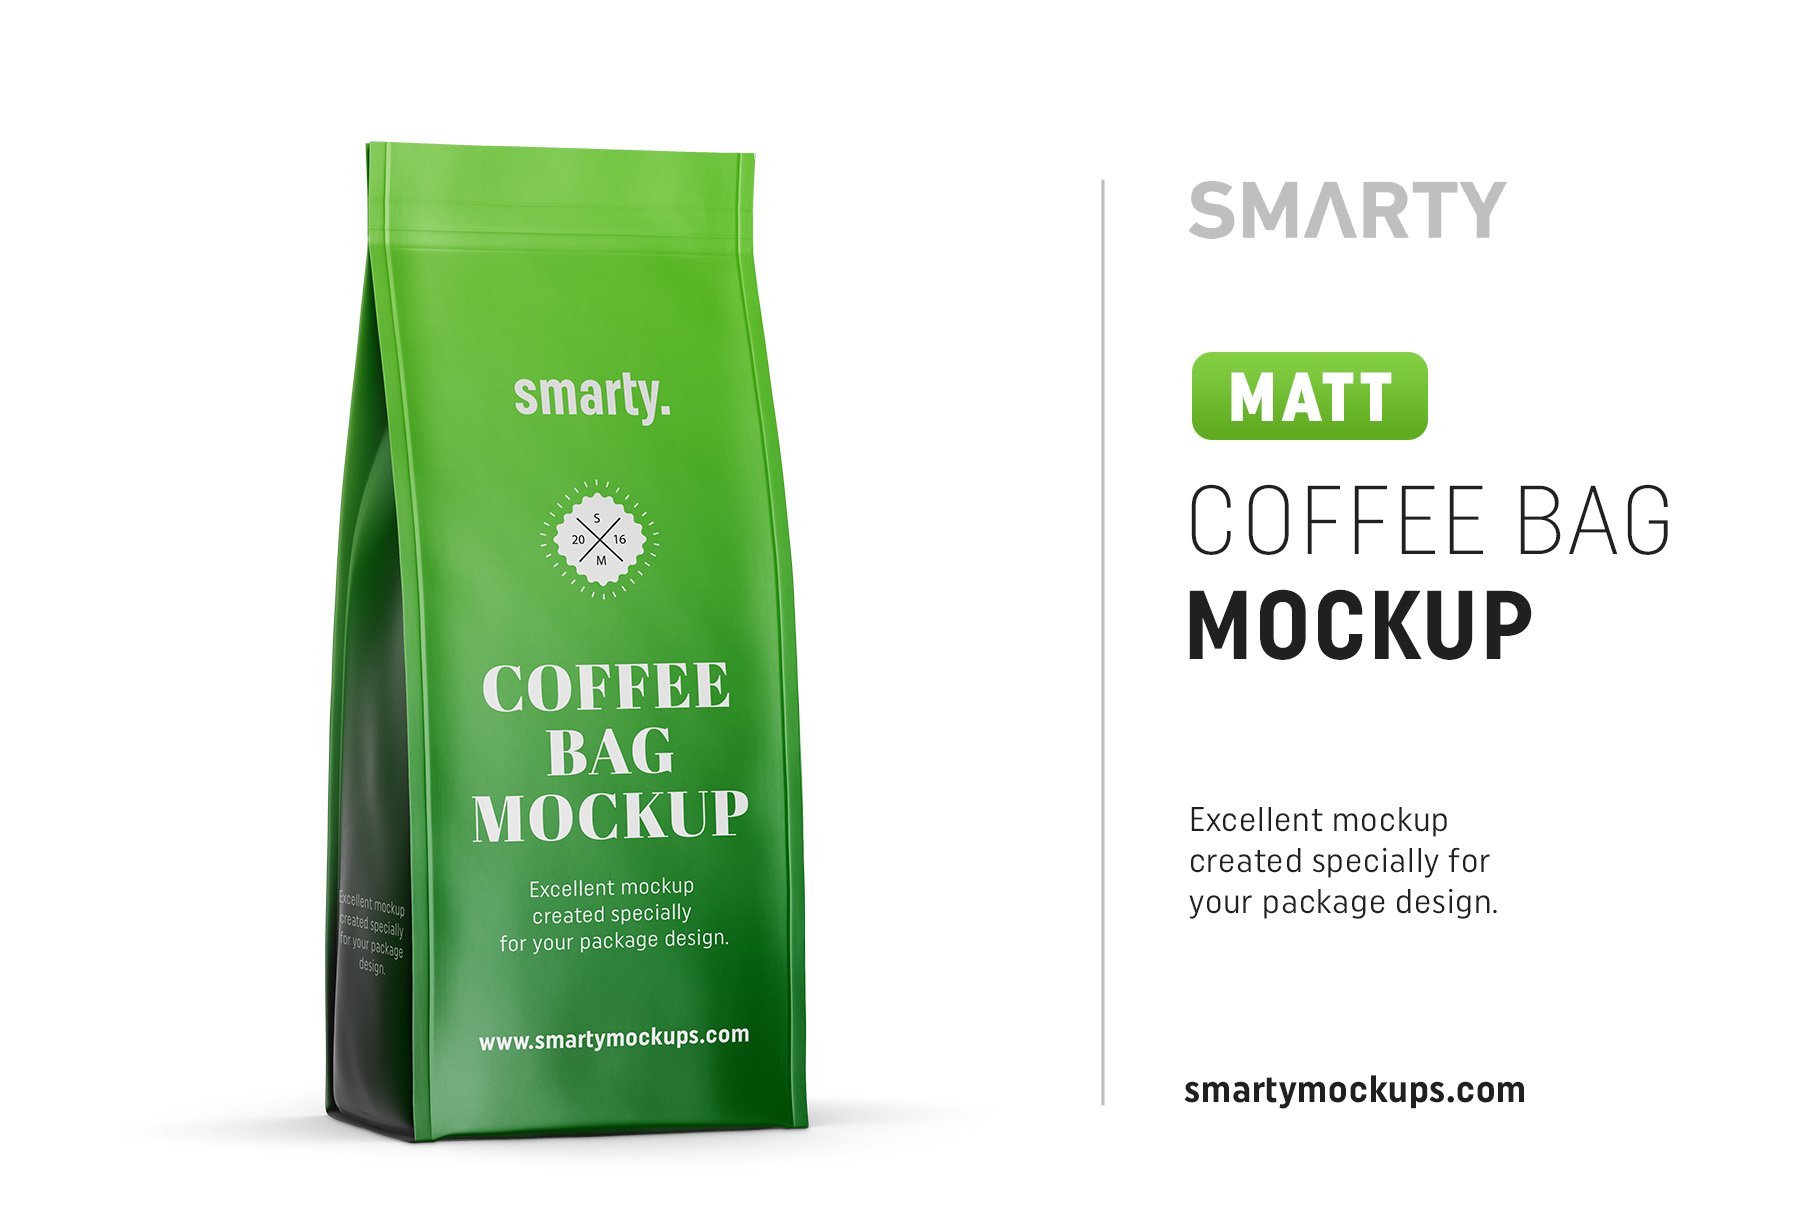 Matt coffee bag mockup cover image.